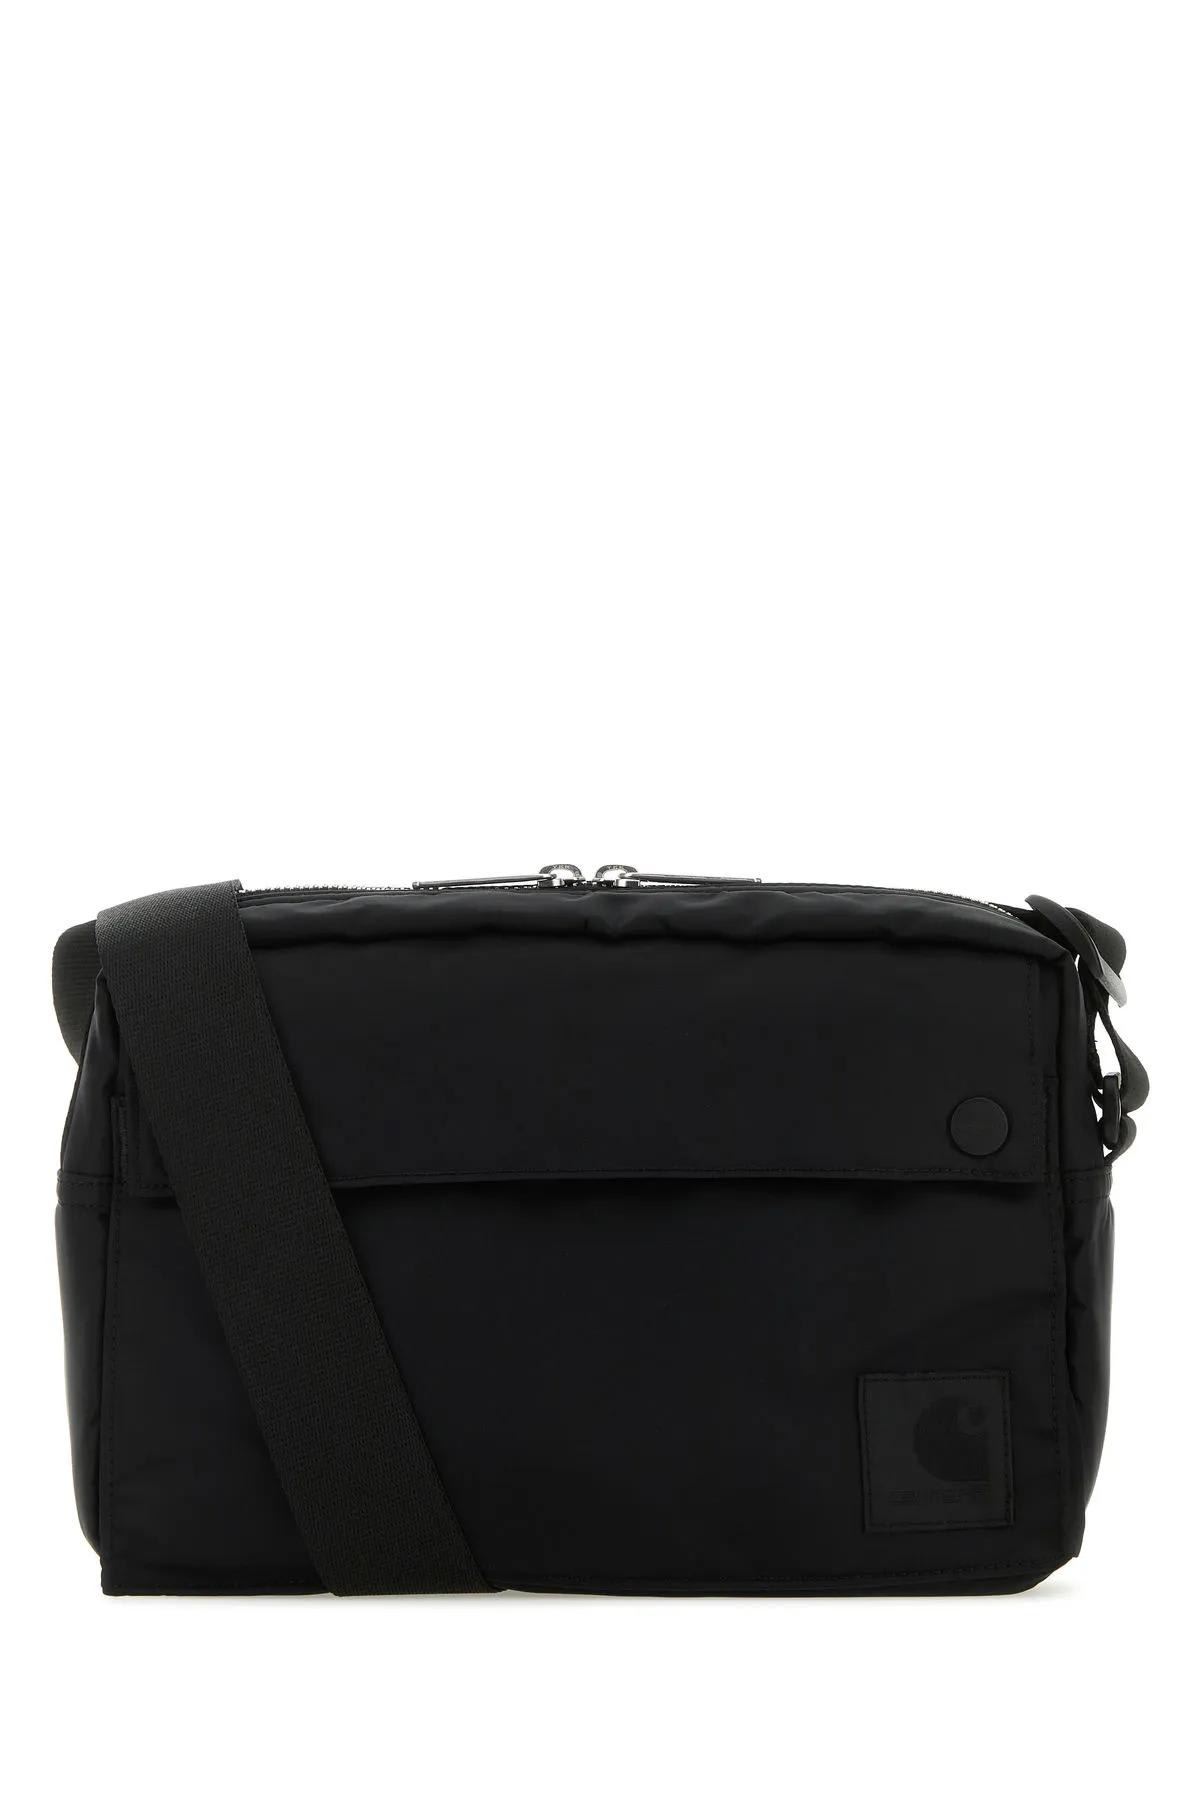 Shop Carhartt Black Fabric Otley Shoulder Bag